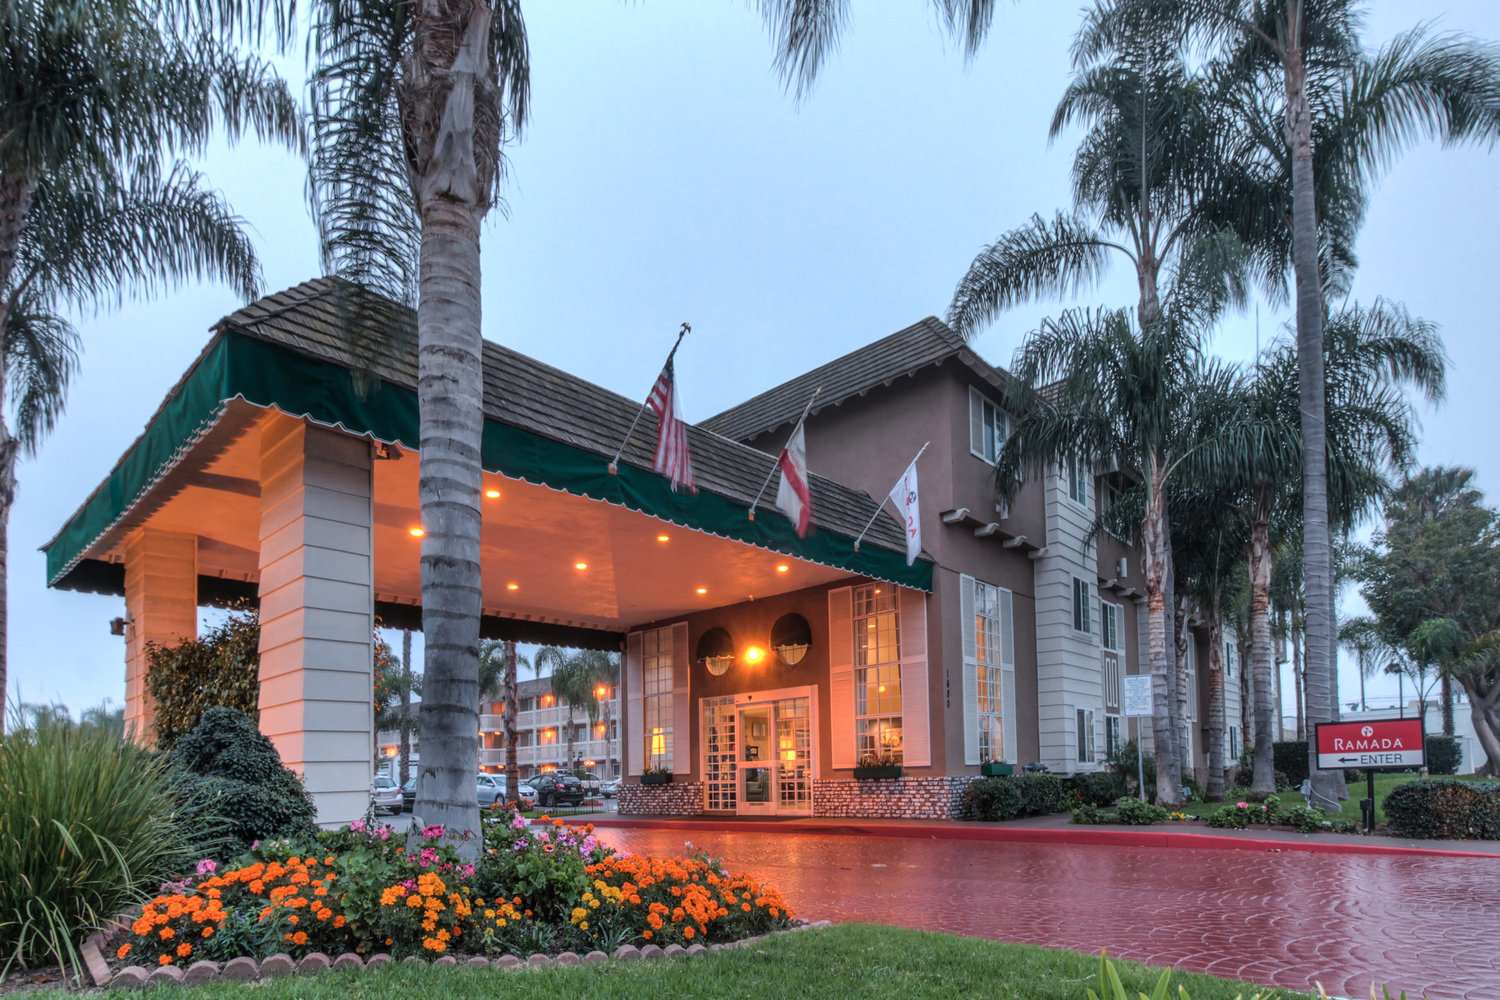 Ramada Inn And Suites Costa Mesa Newport Beach  Costa Mesa  Jobs